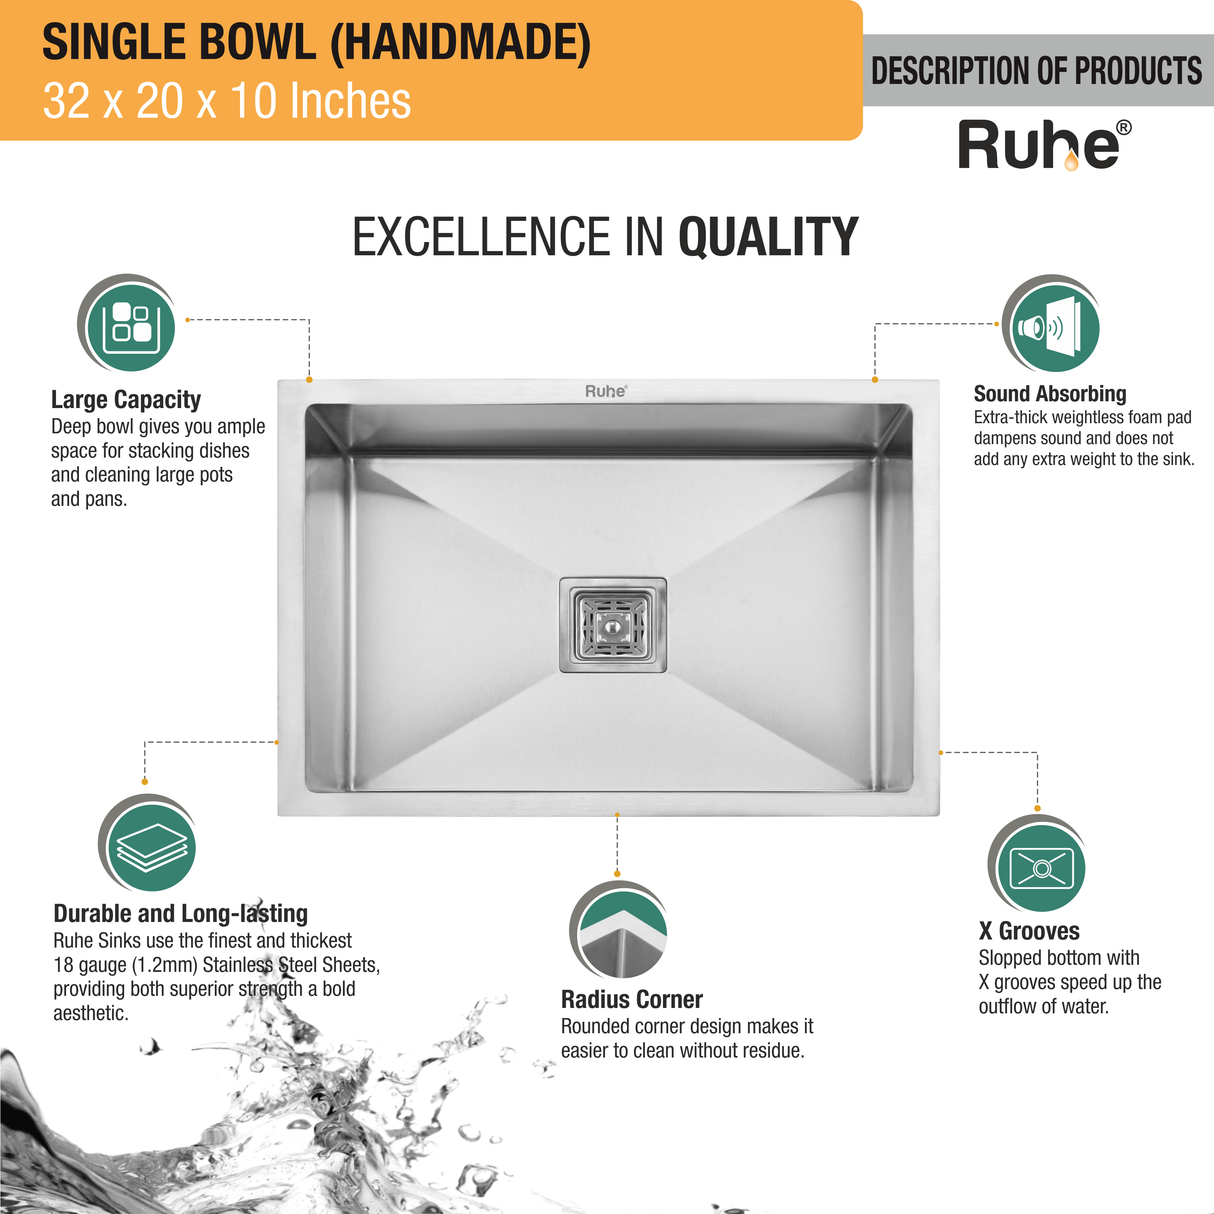 Handmade Single Bowl Premium Kitchen Sink (32 x 20 x 10 Inches) description of product